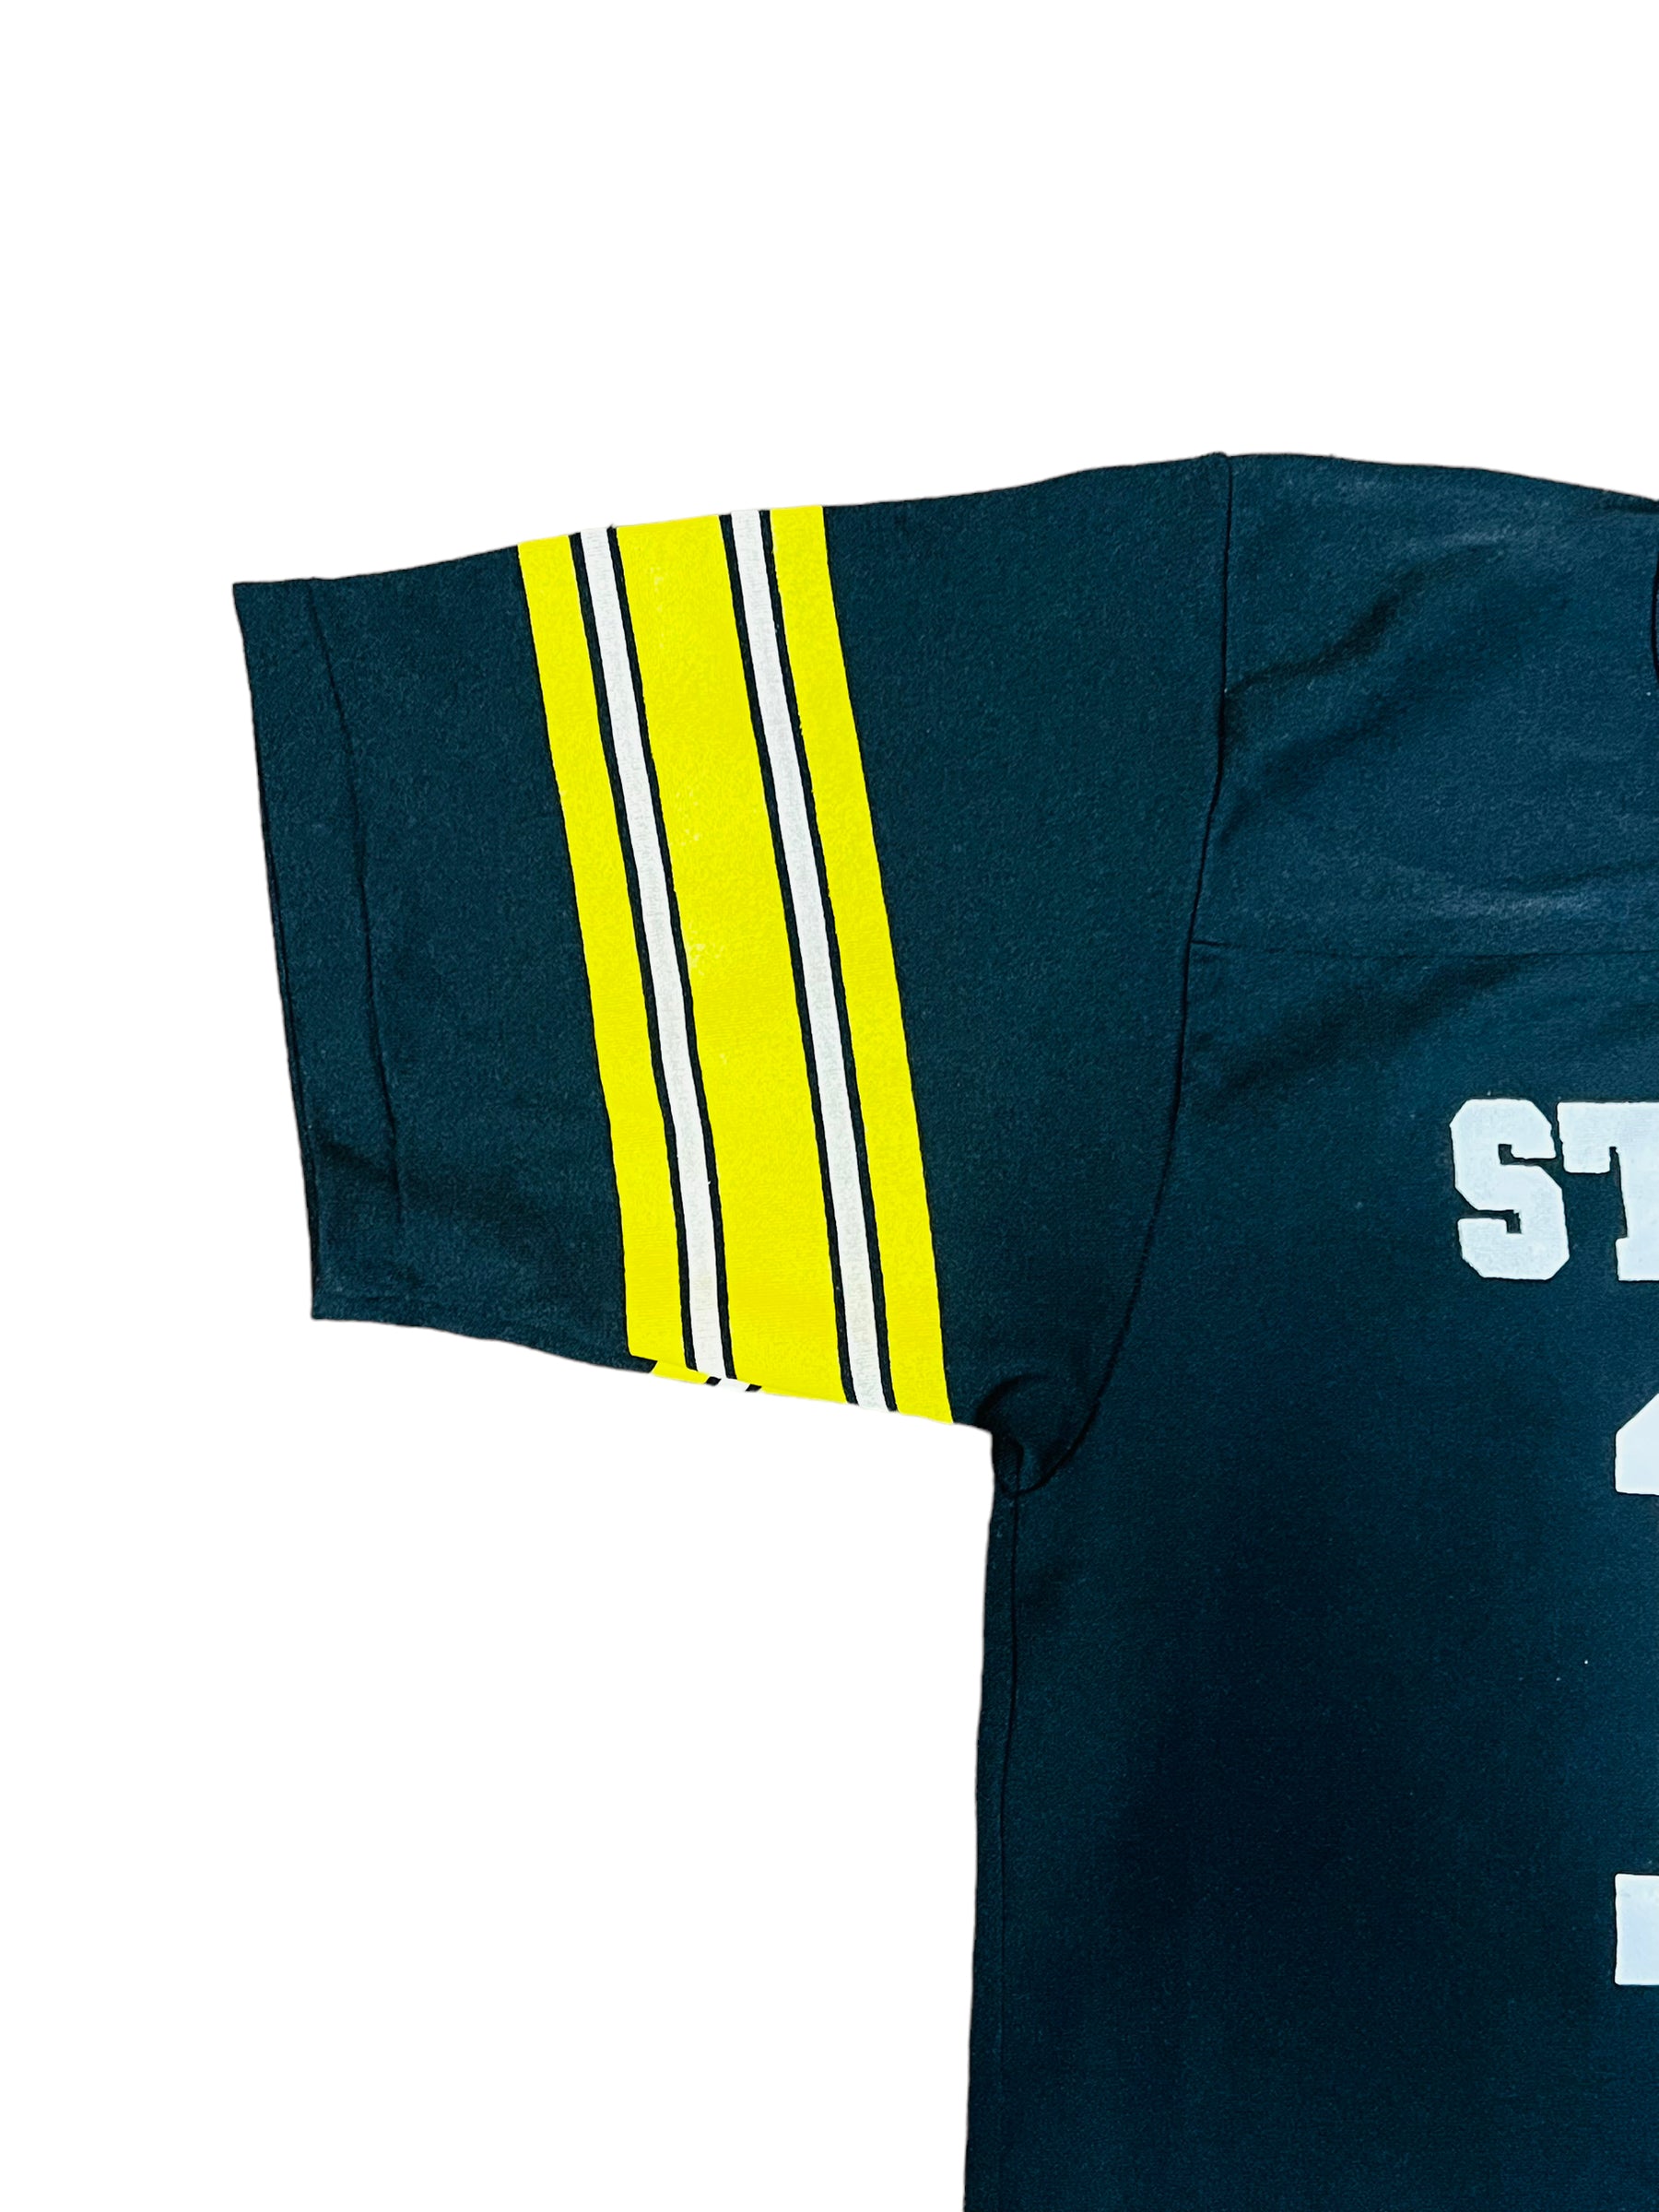 80s Pittsburg Steelers Football Jersey t-shirt Medium - The